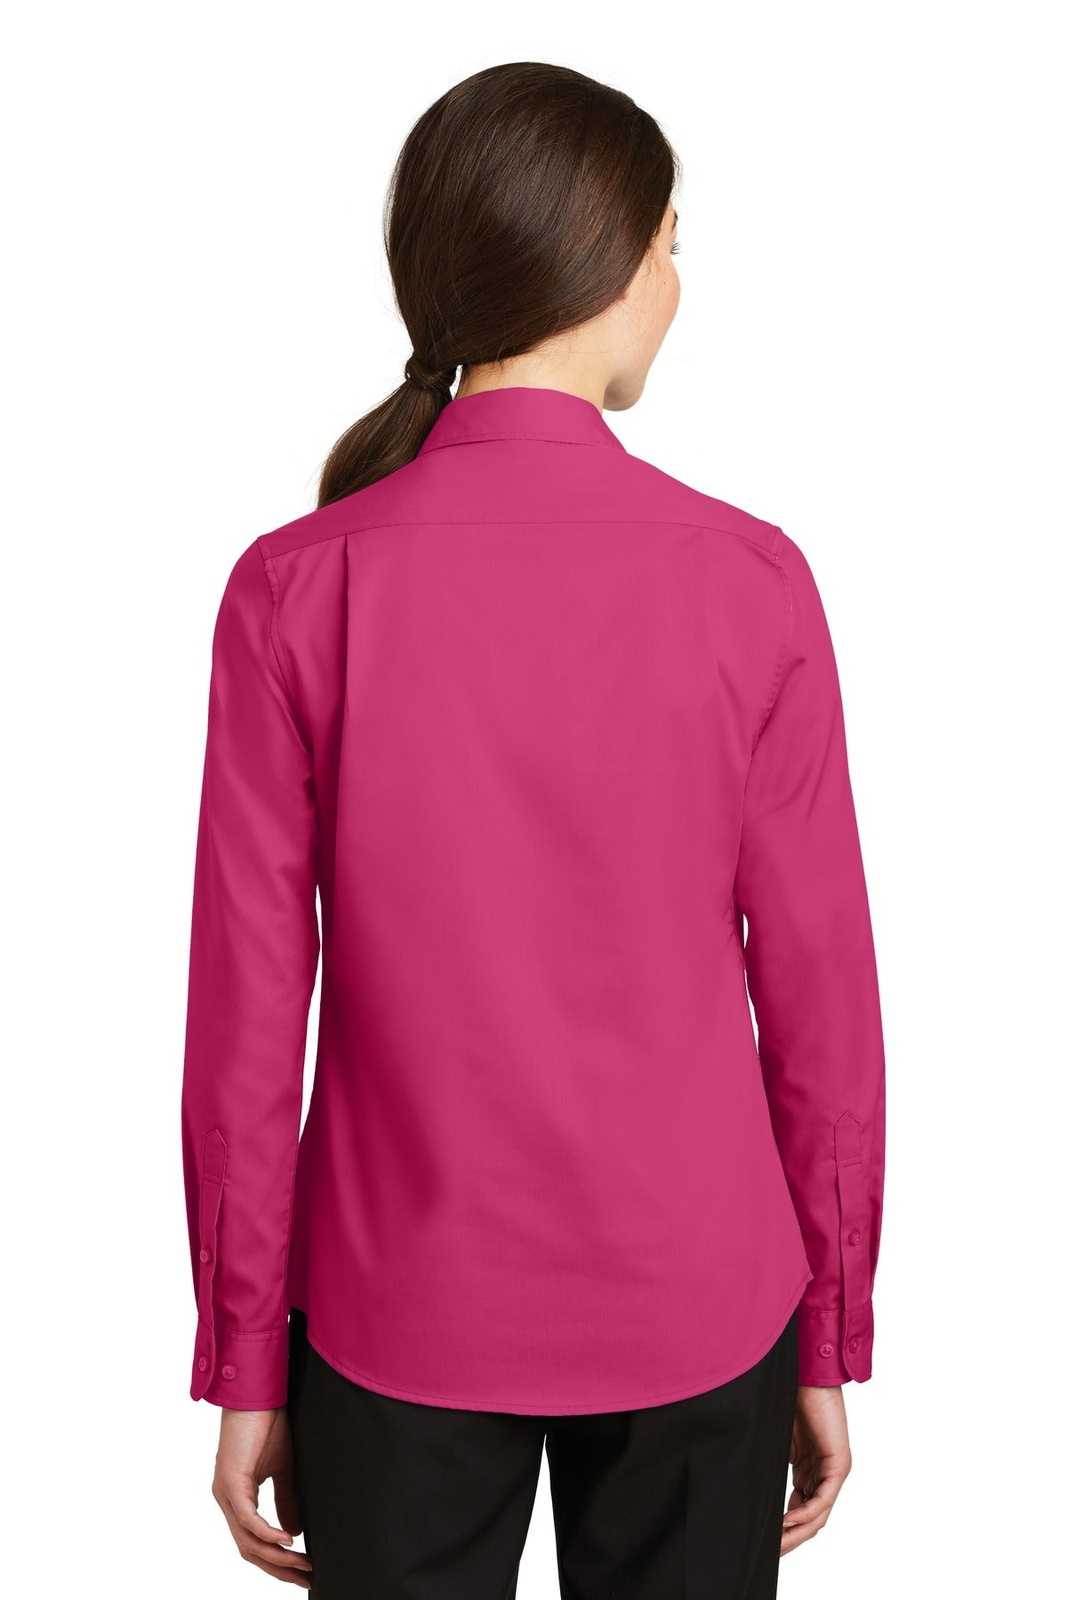 Port Authority L663 Ladies Superpro Twill Shirt - Pink Azalea - HIT a Double - 1